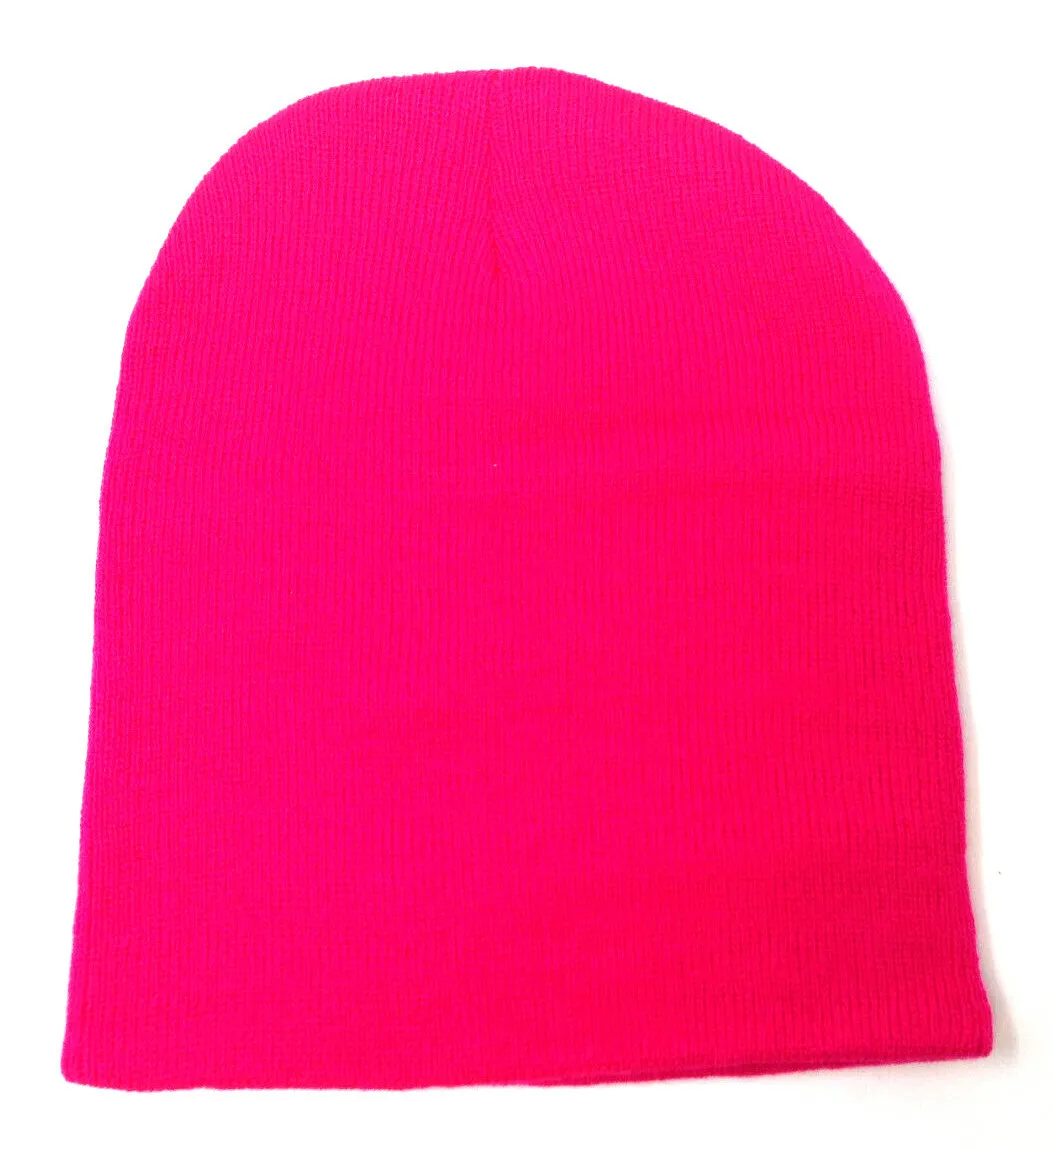 Solid Plain Blank Short Uncuffed Knit Beanie skull cap ski Hat retro hot pink - $16.99